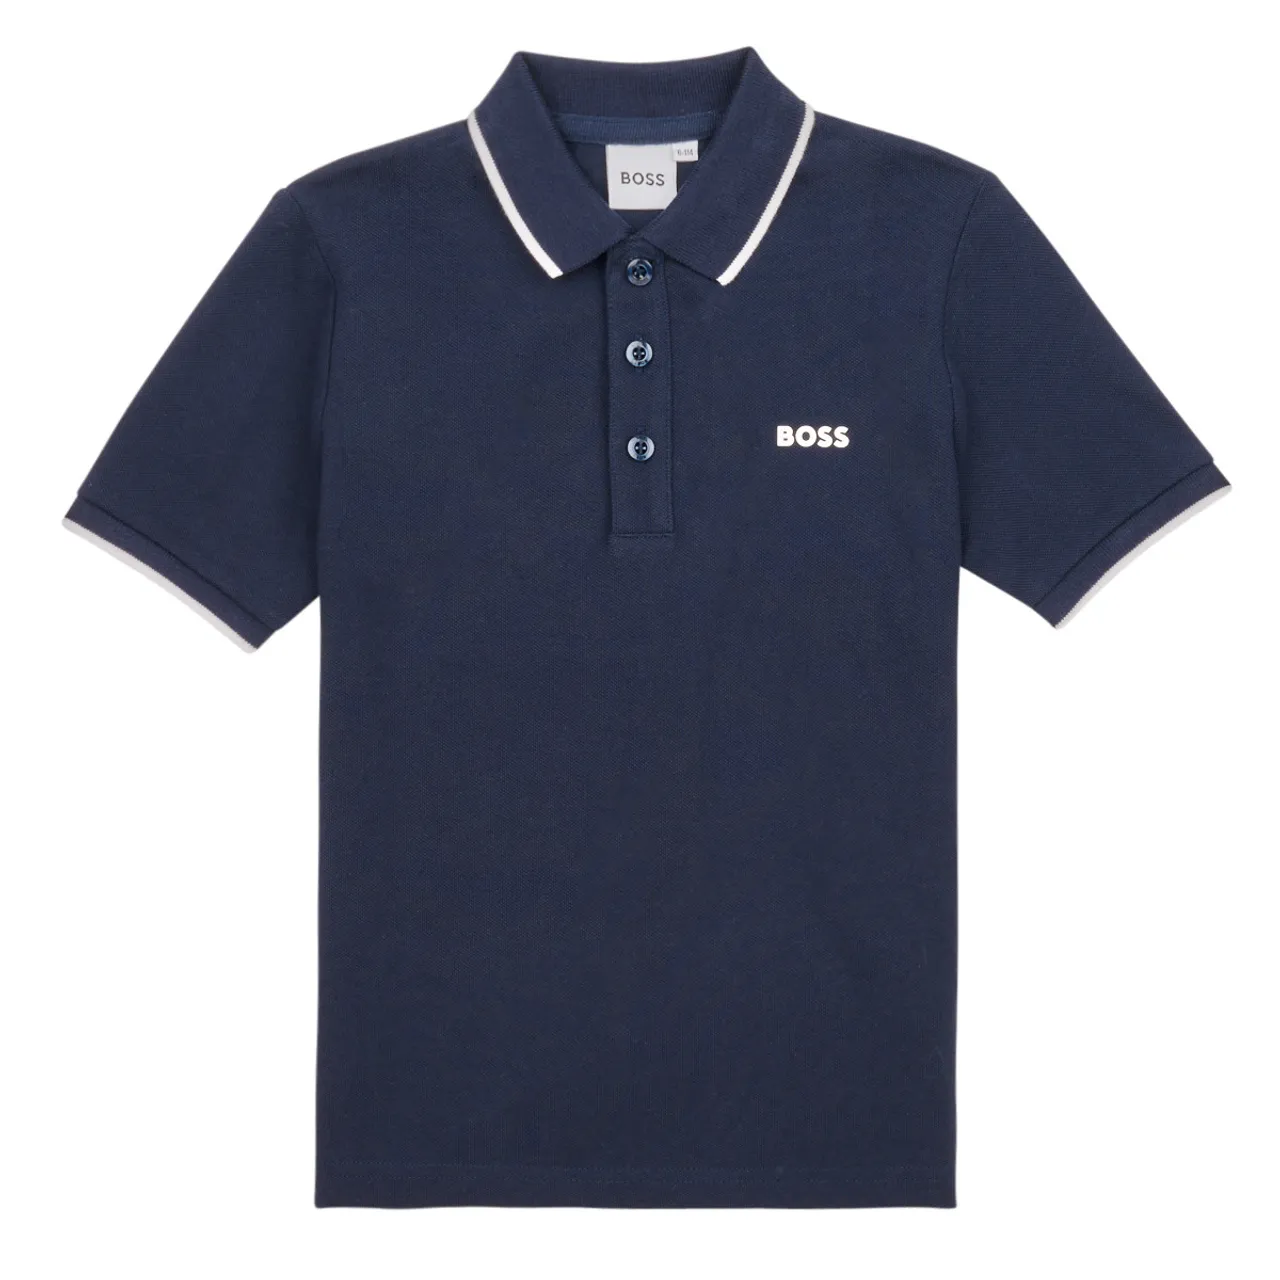 BOSS  J25P26-849-C  boys's Children's polo shirt in Marine